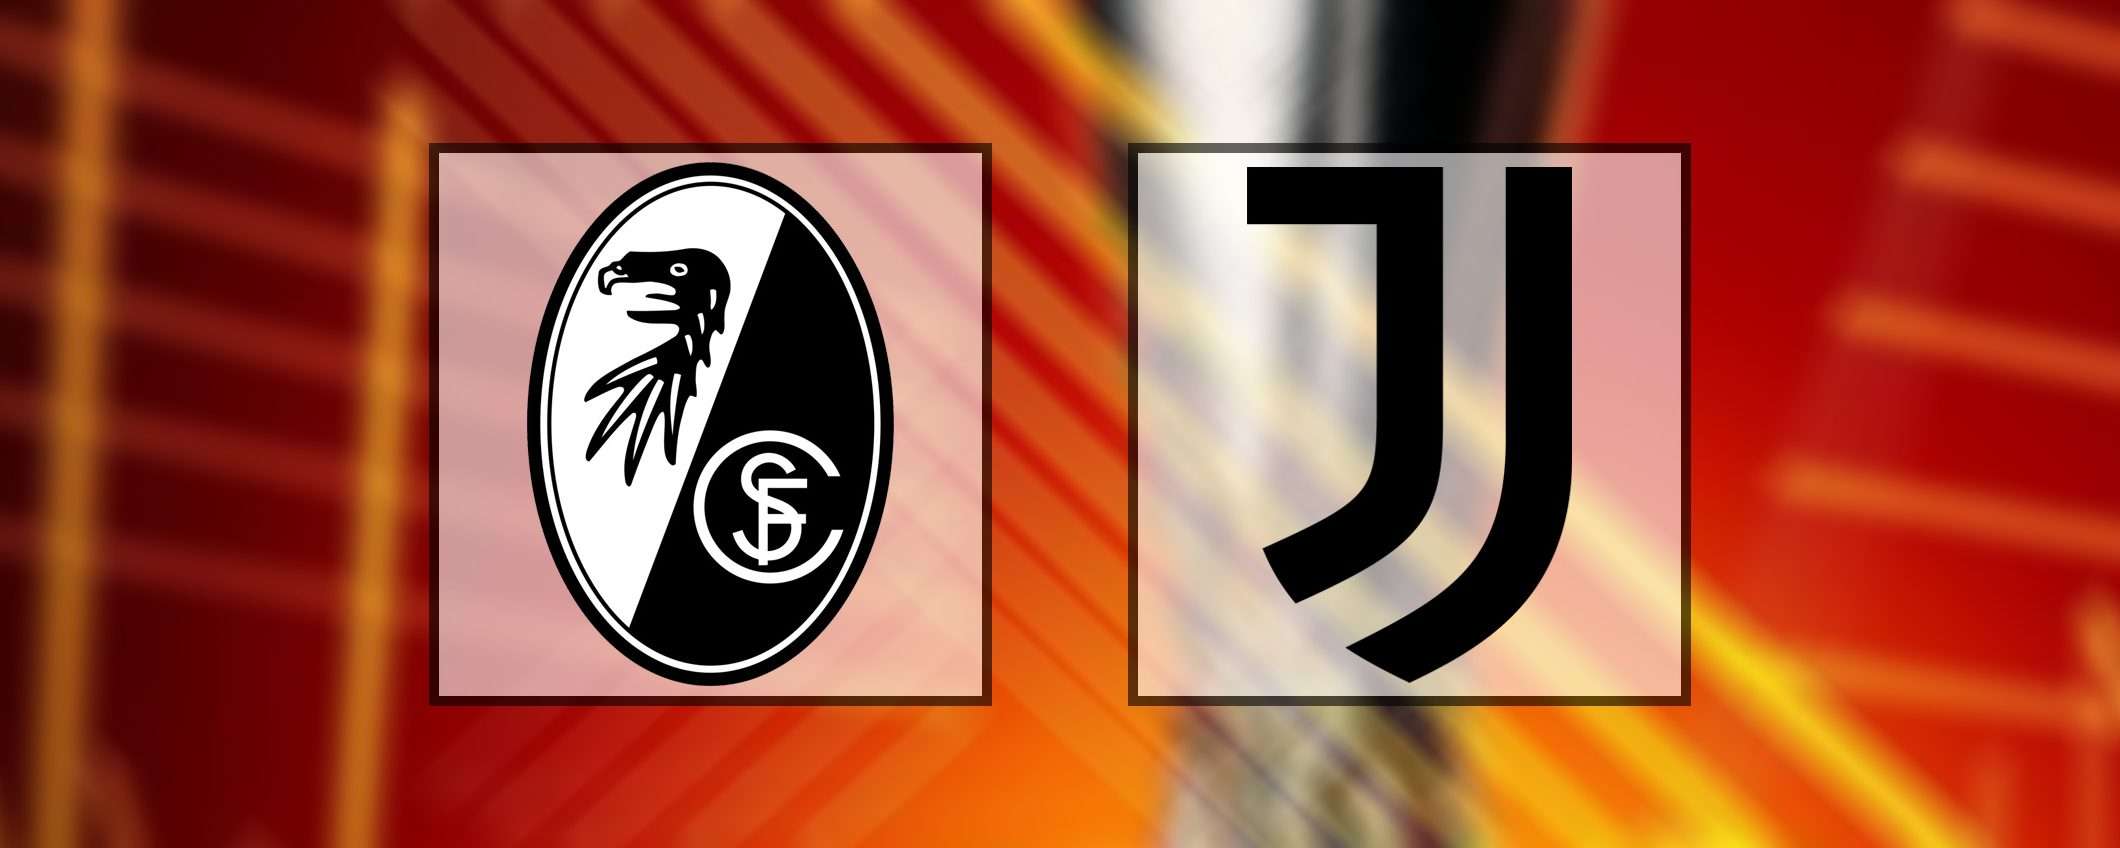 Come vedere Friburgo-Juventus in streaming gratis